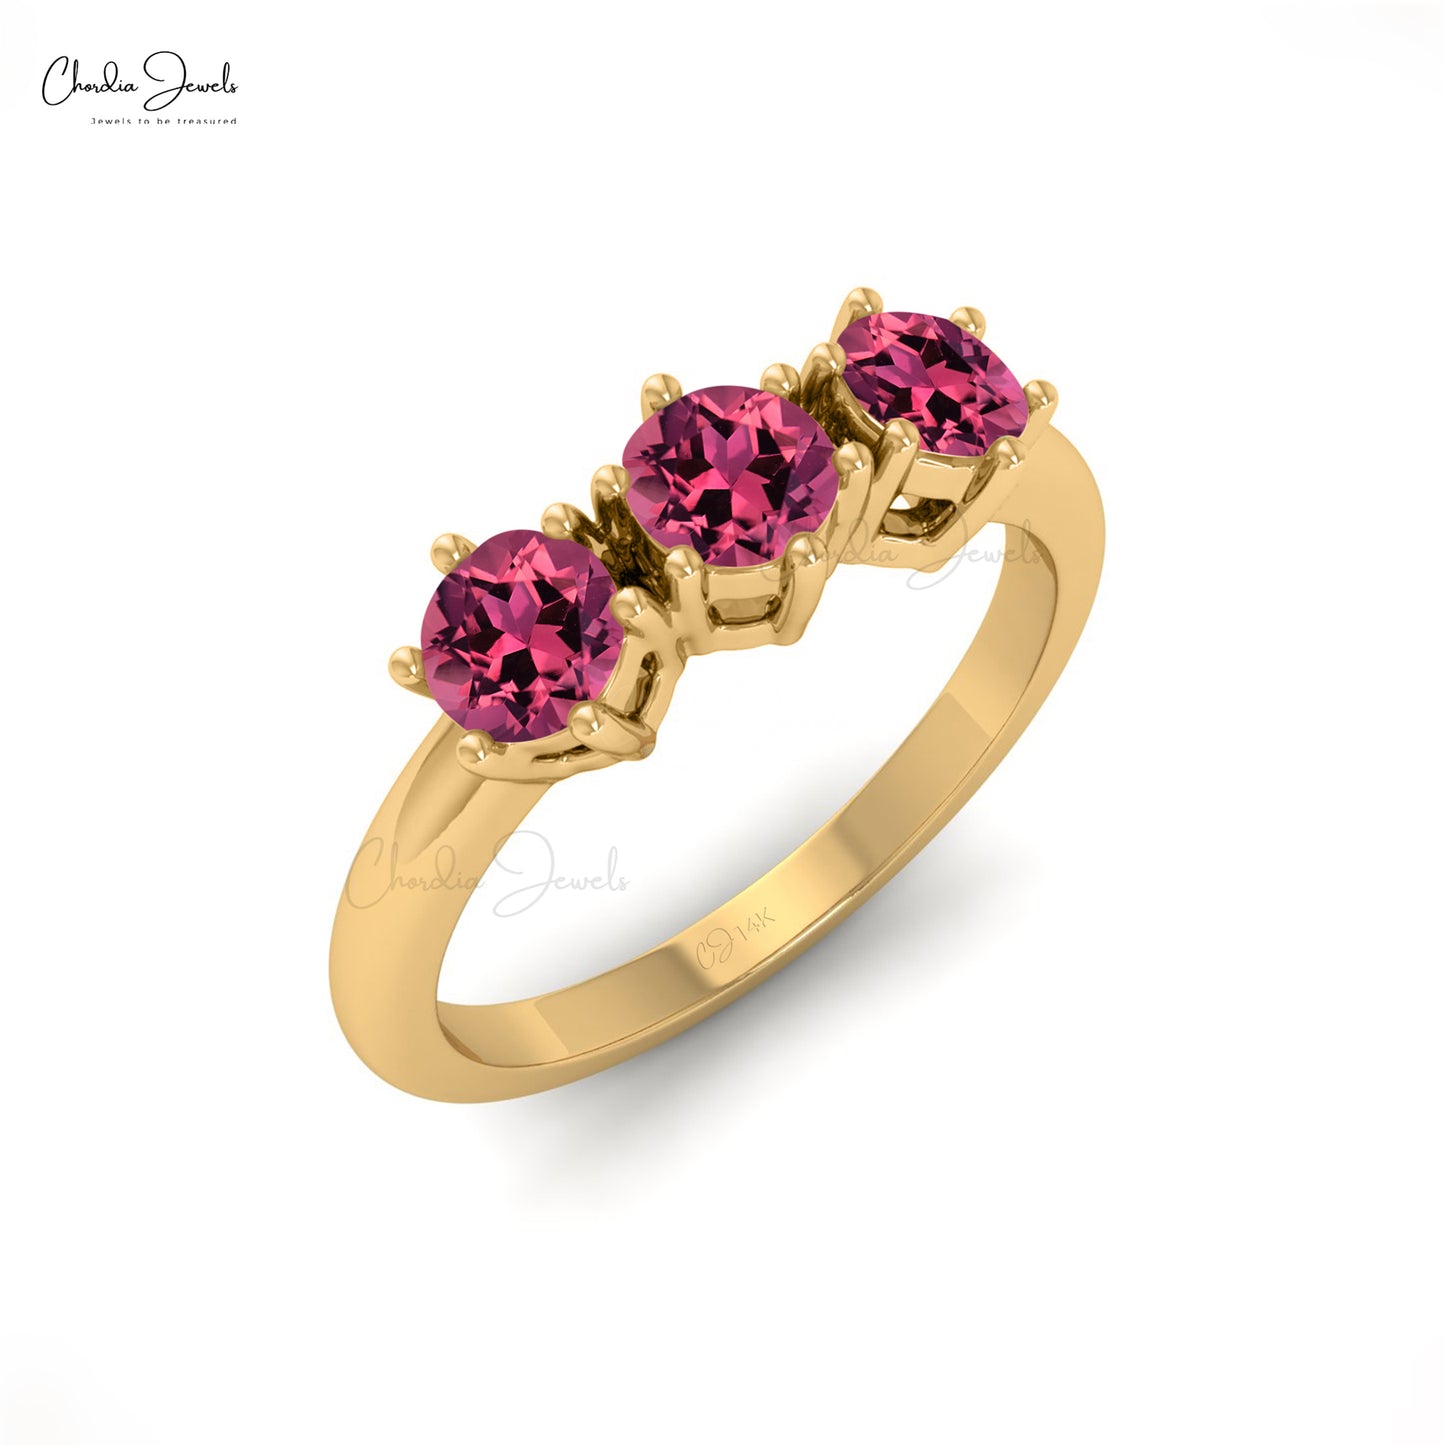 Rubellite Pink Tourmaline Ring in 14k gold size 7 | Natural Rock Shop